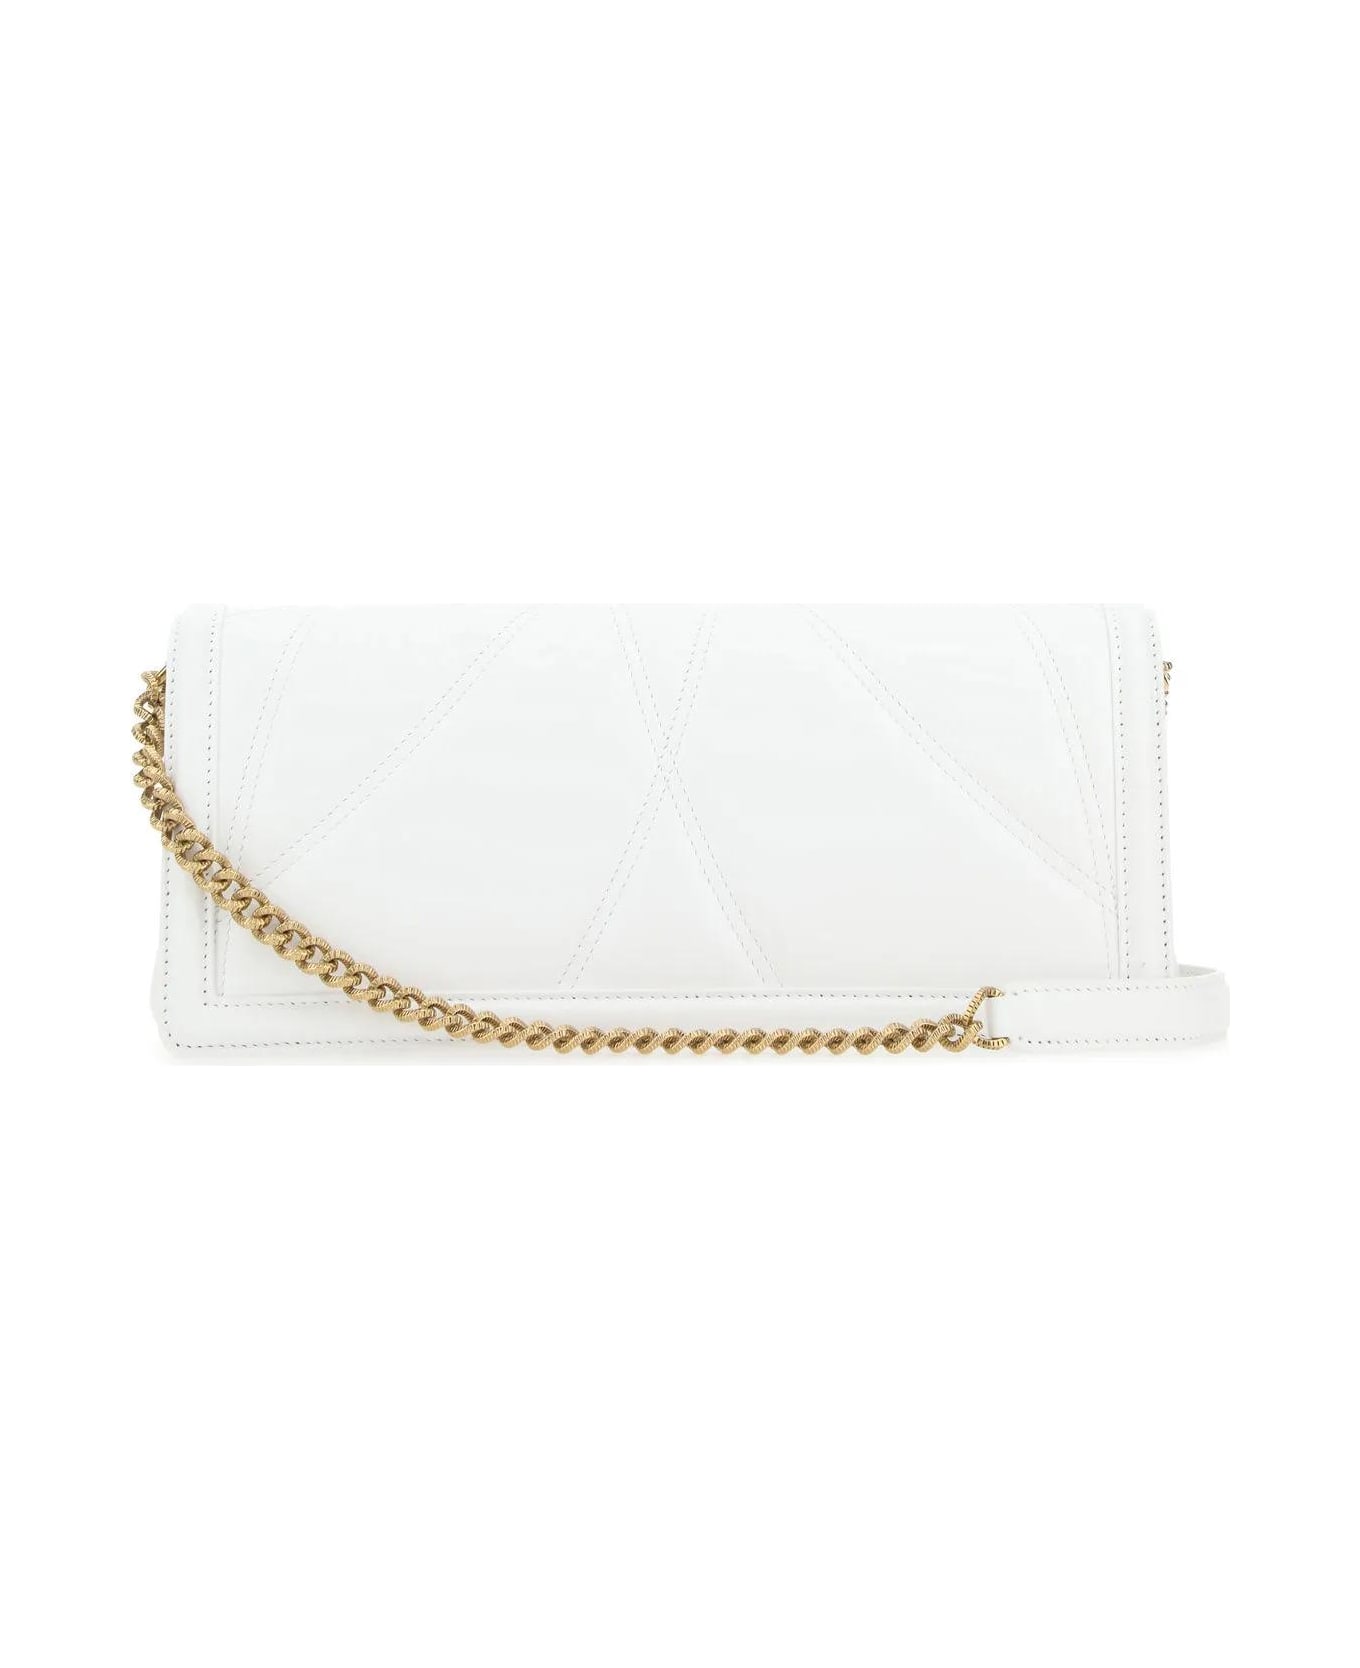 Dolce & Gabbana White Nappa Leather Devotion Shoulder Bag - Bianco